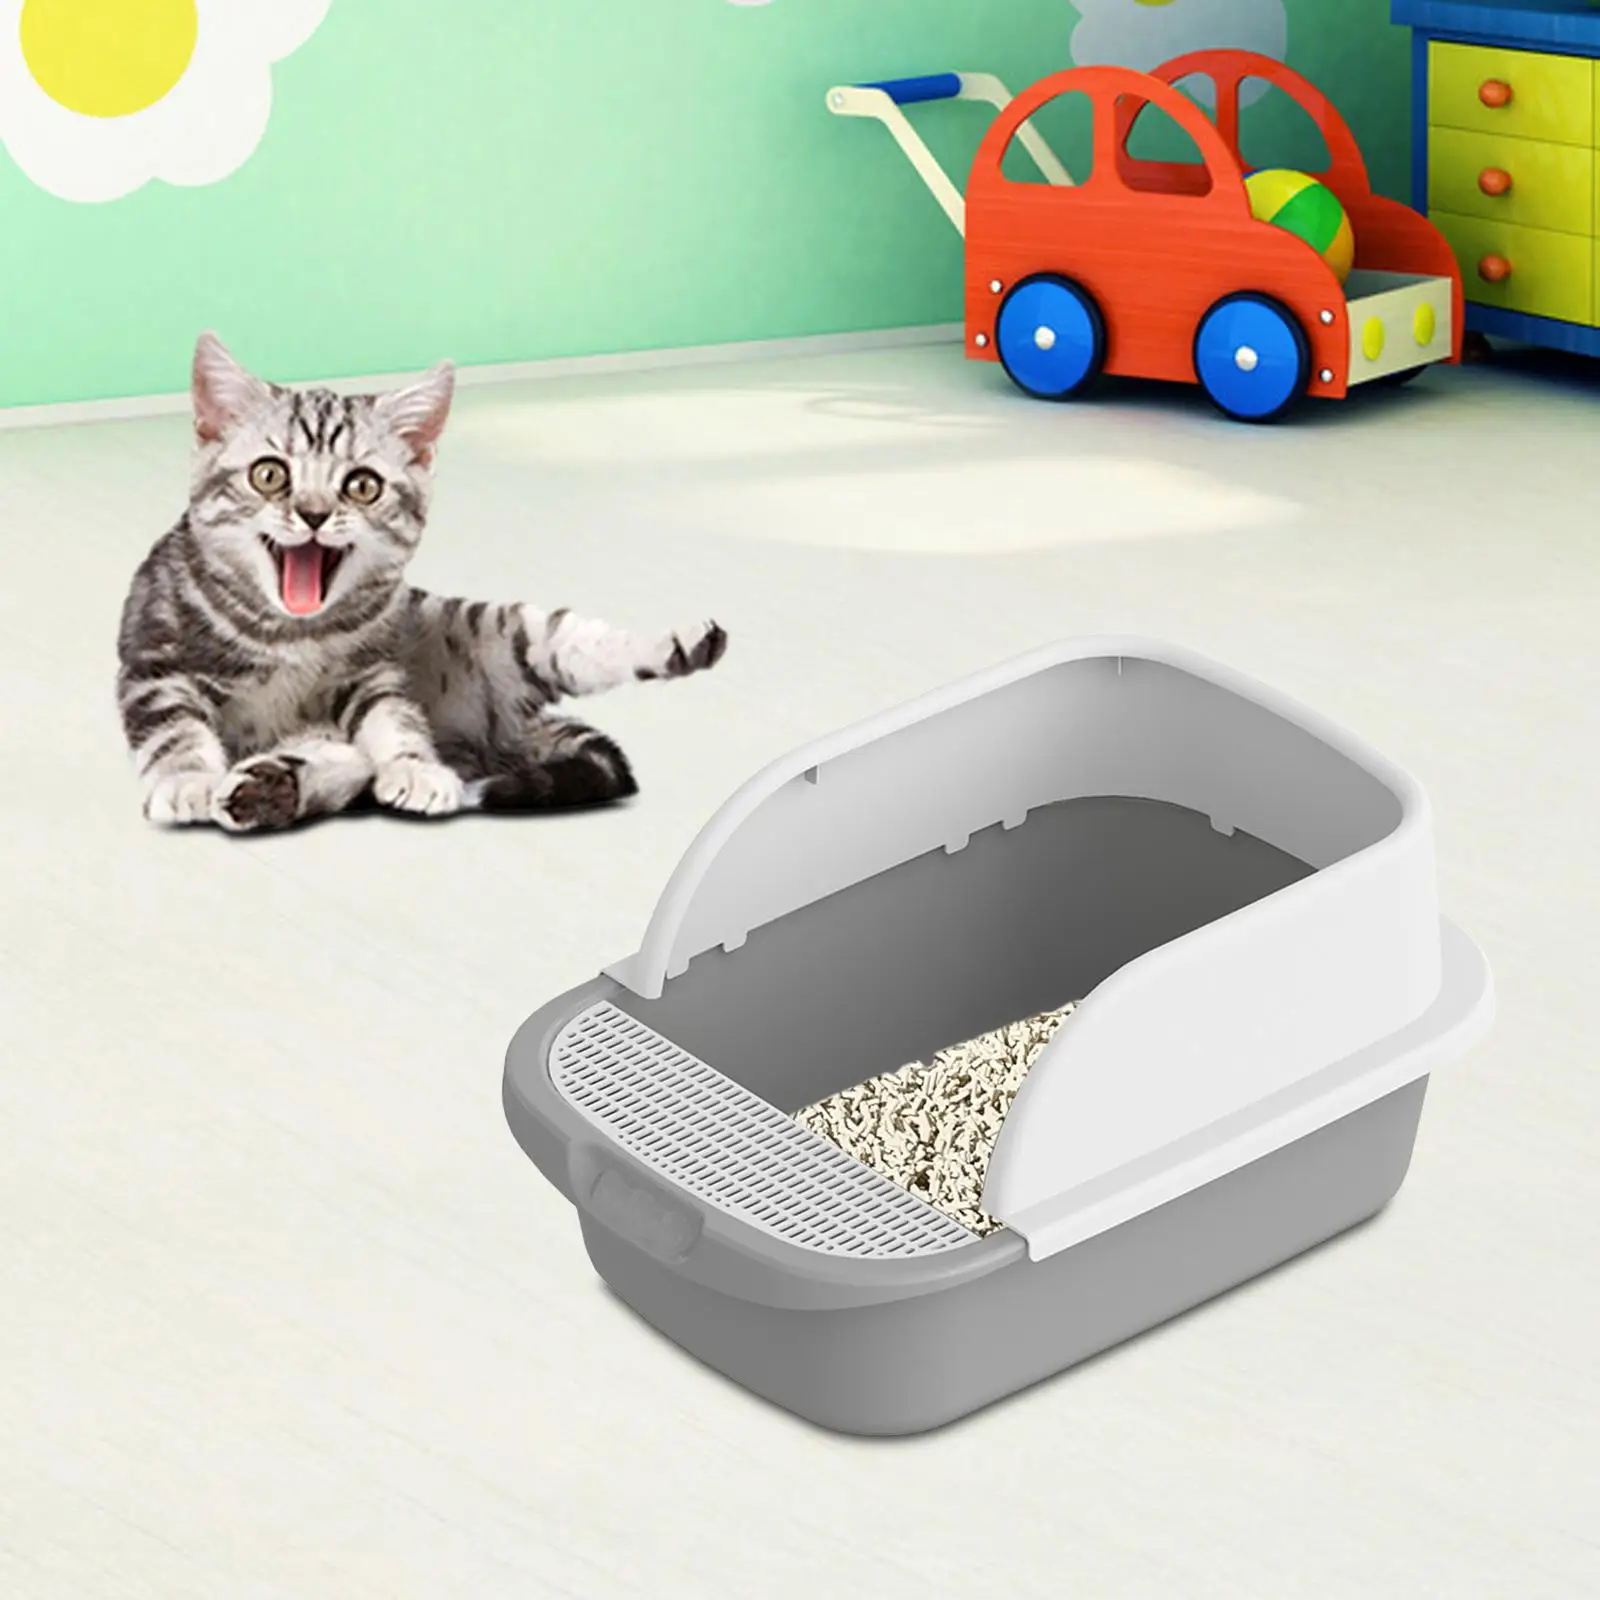 Cat Litter Box Toilet Travel Durable Semi Enclosed Anti Splashing Sandbox for Kitten